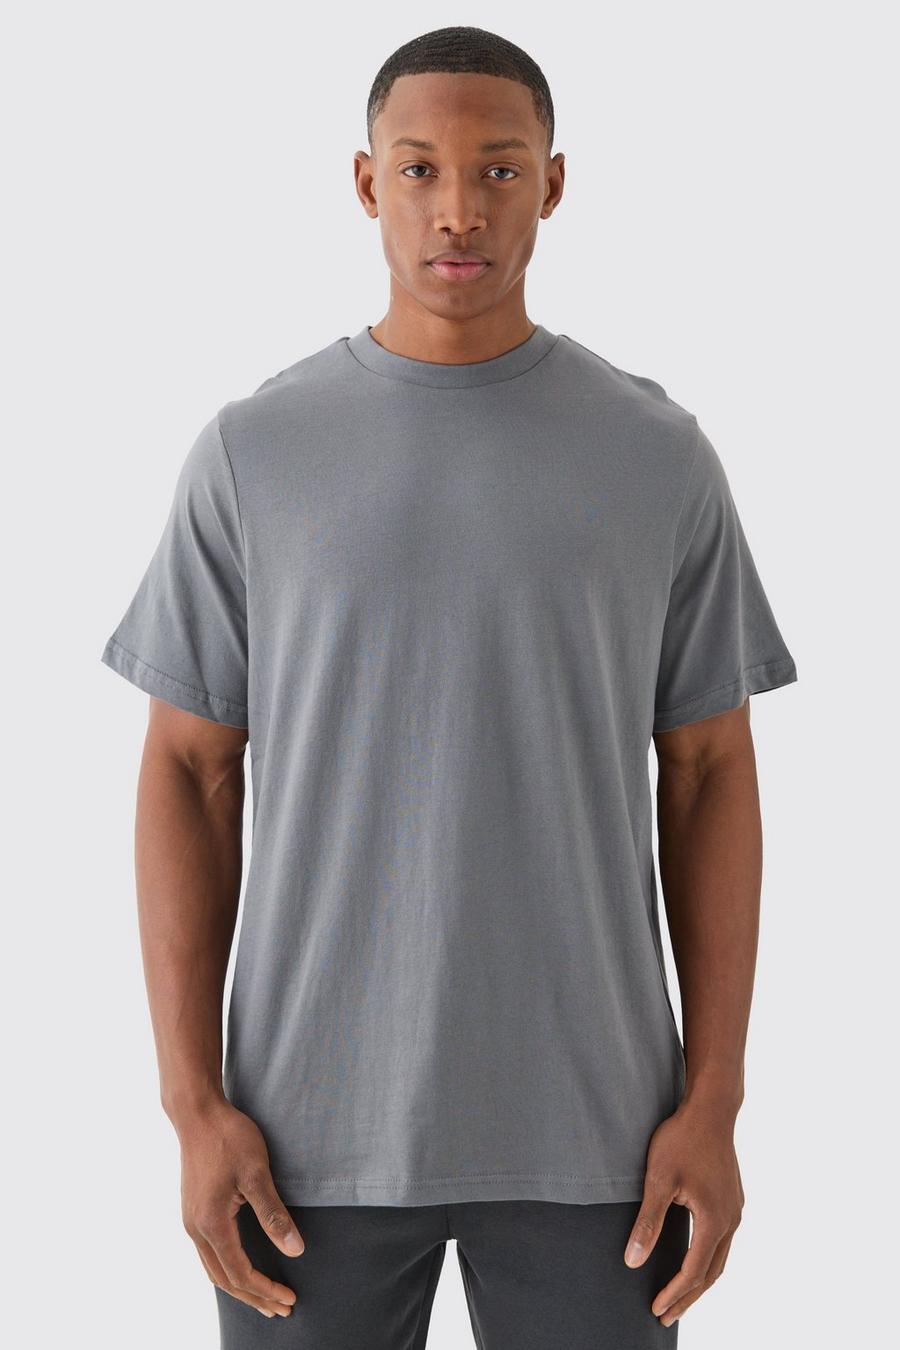 Basic Rundhals T-Shirt, Charcoal gris